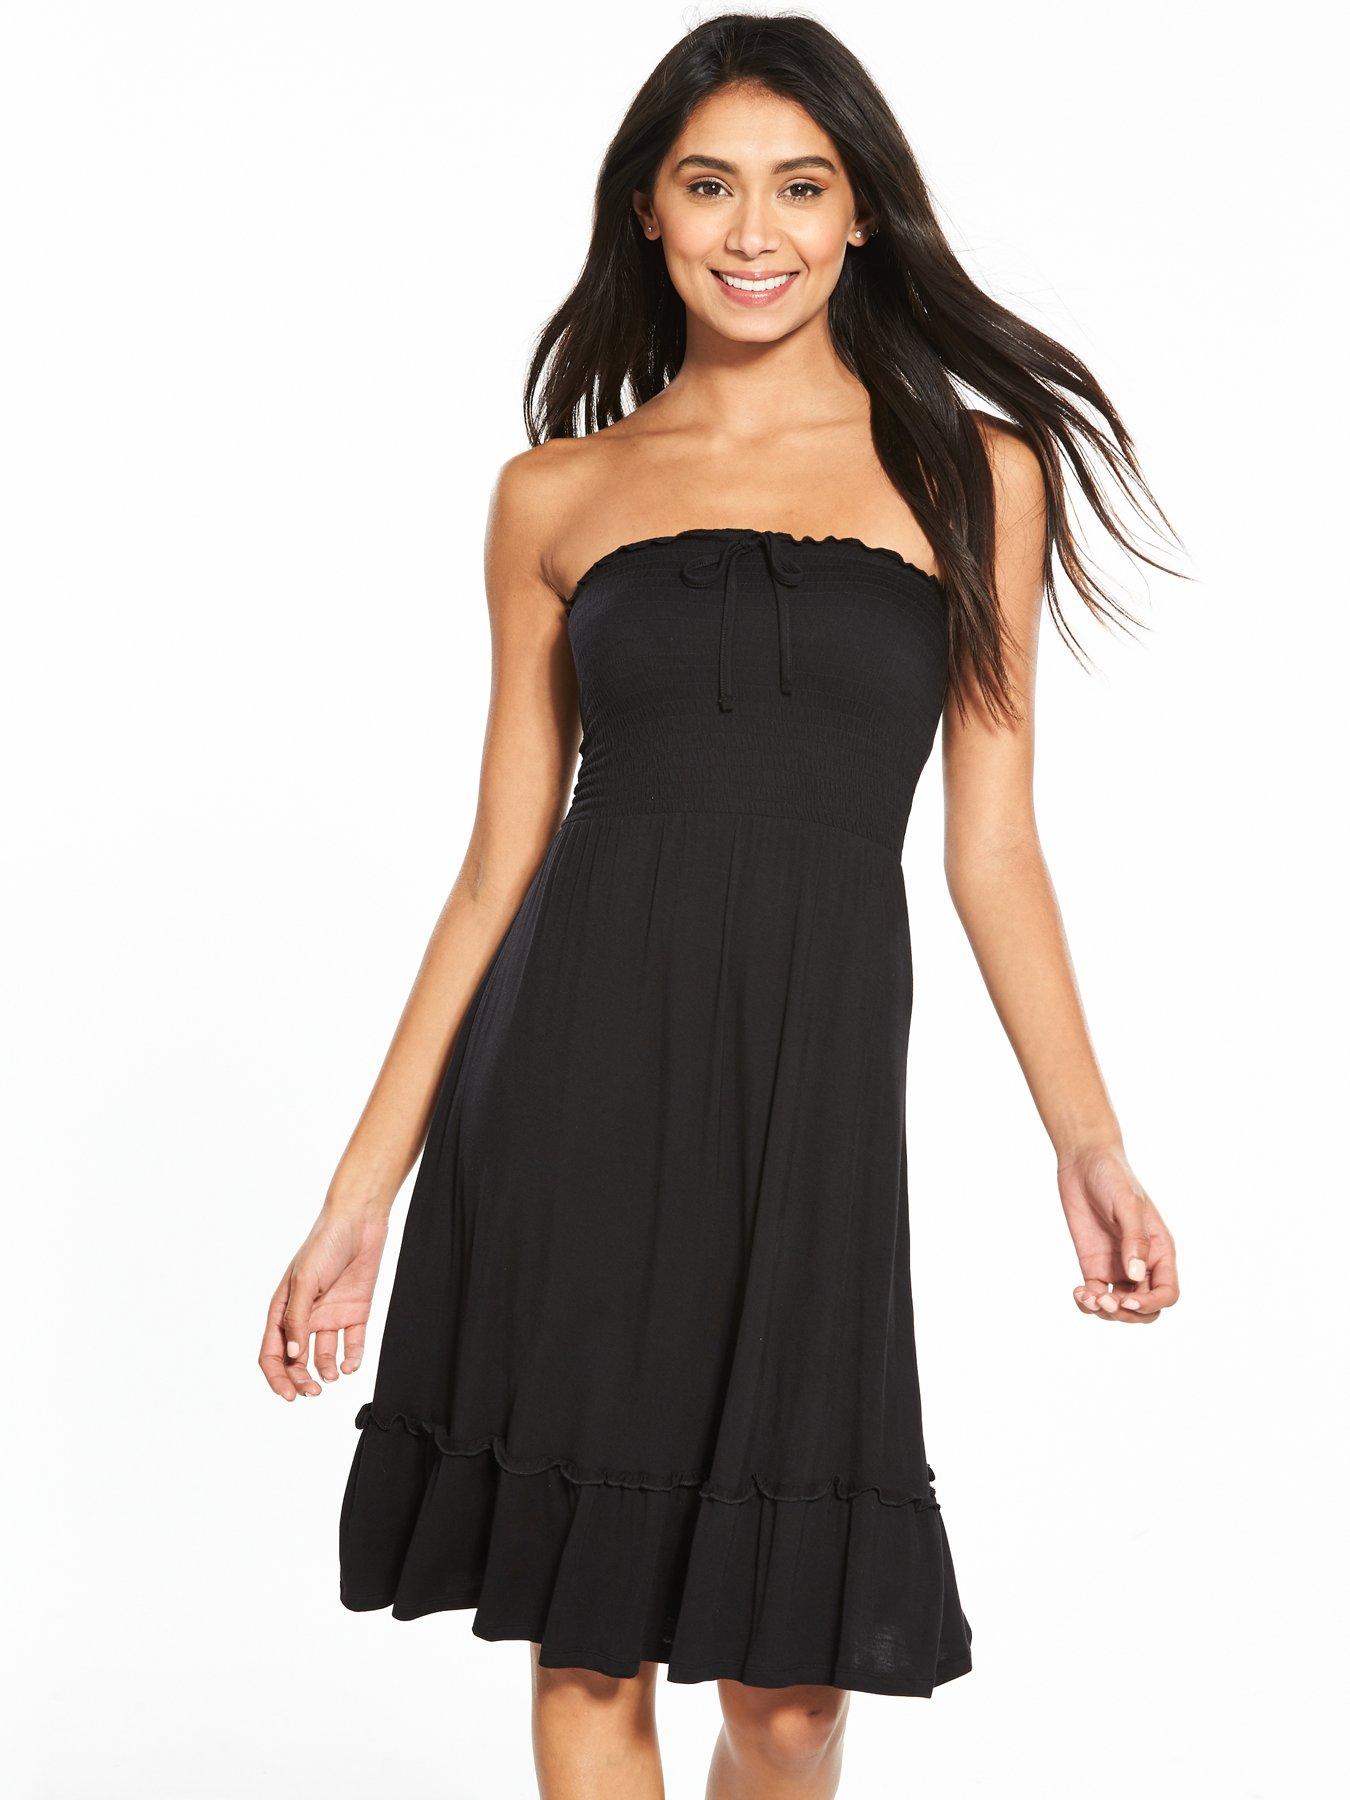 black strapless beach dress